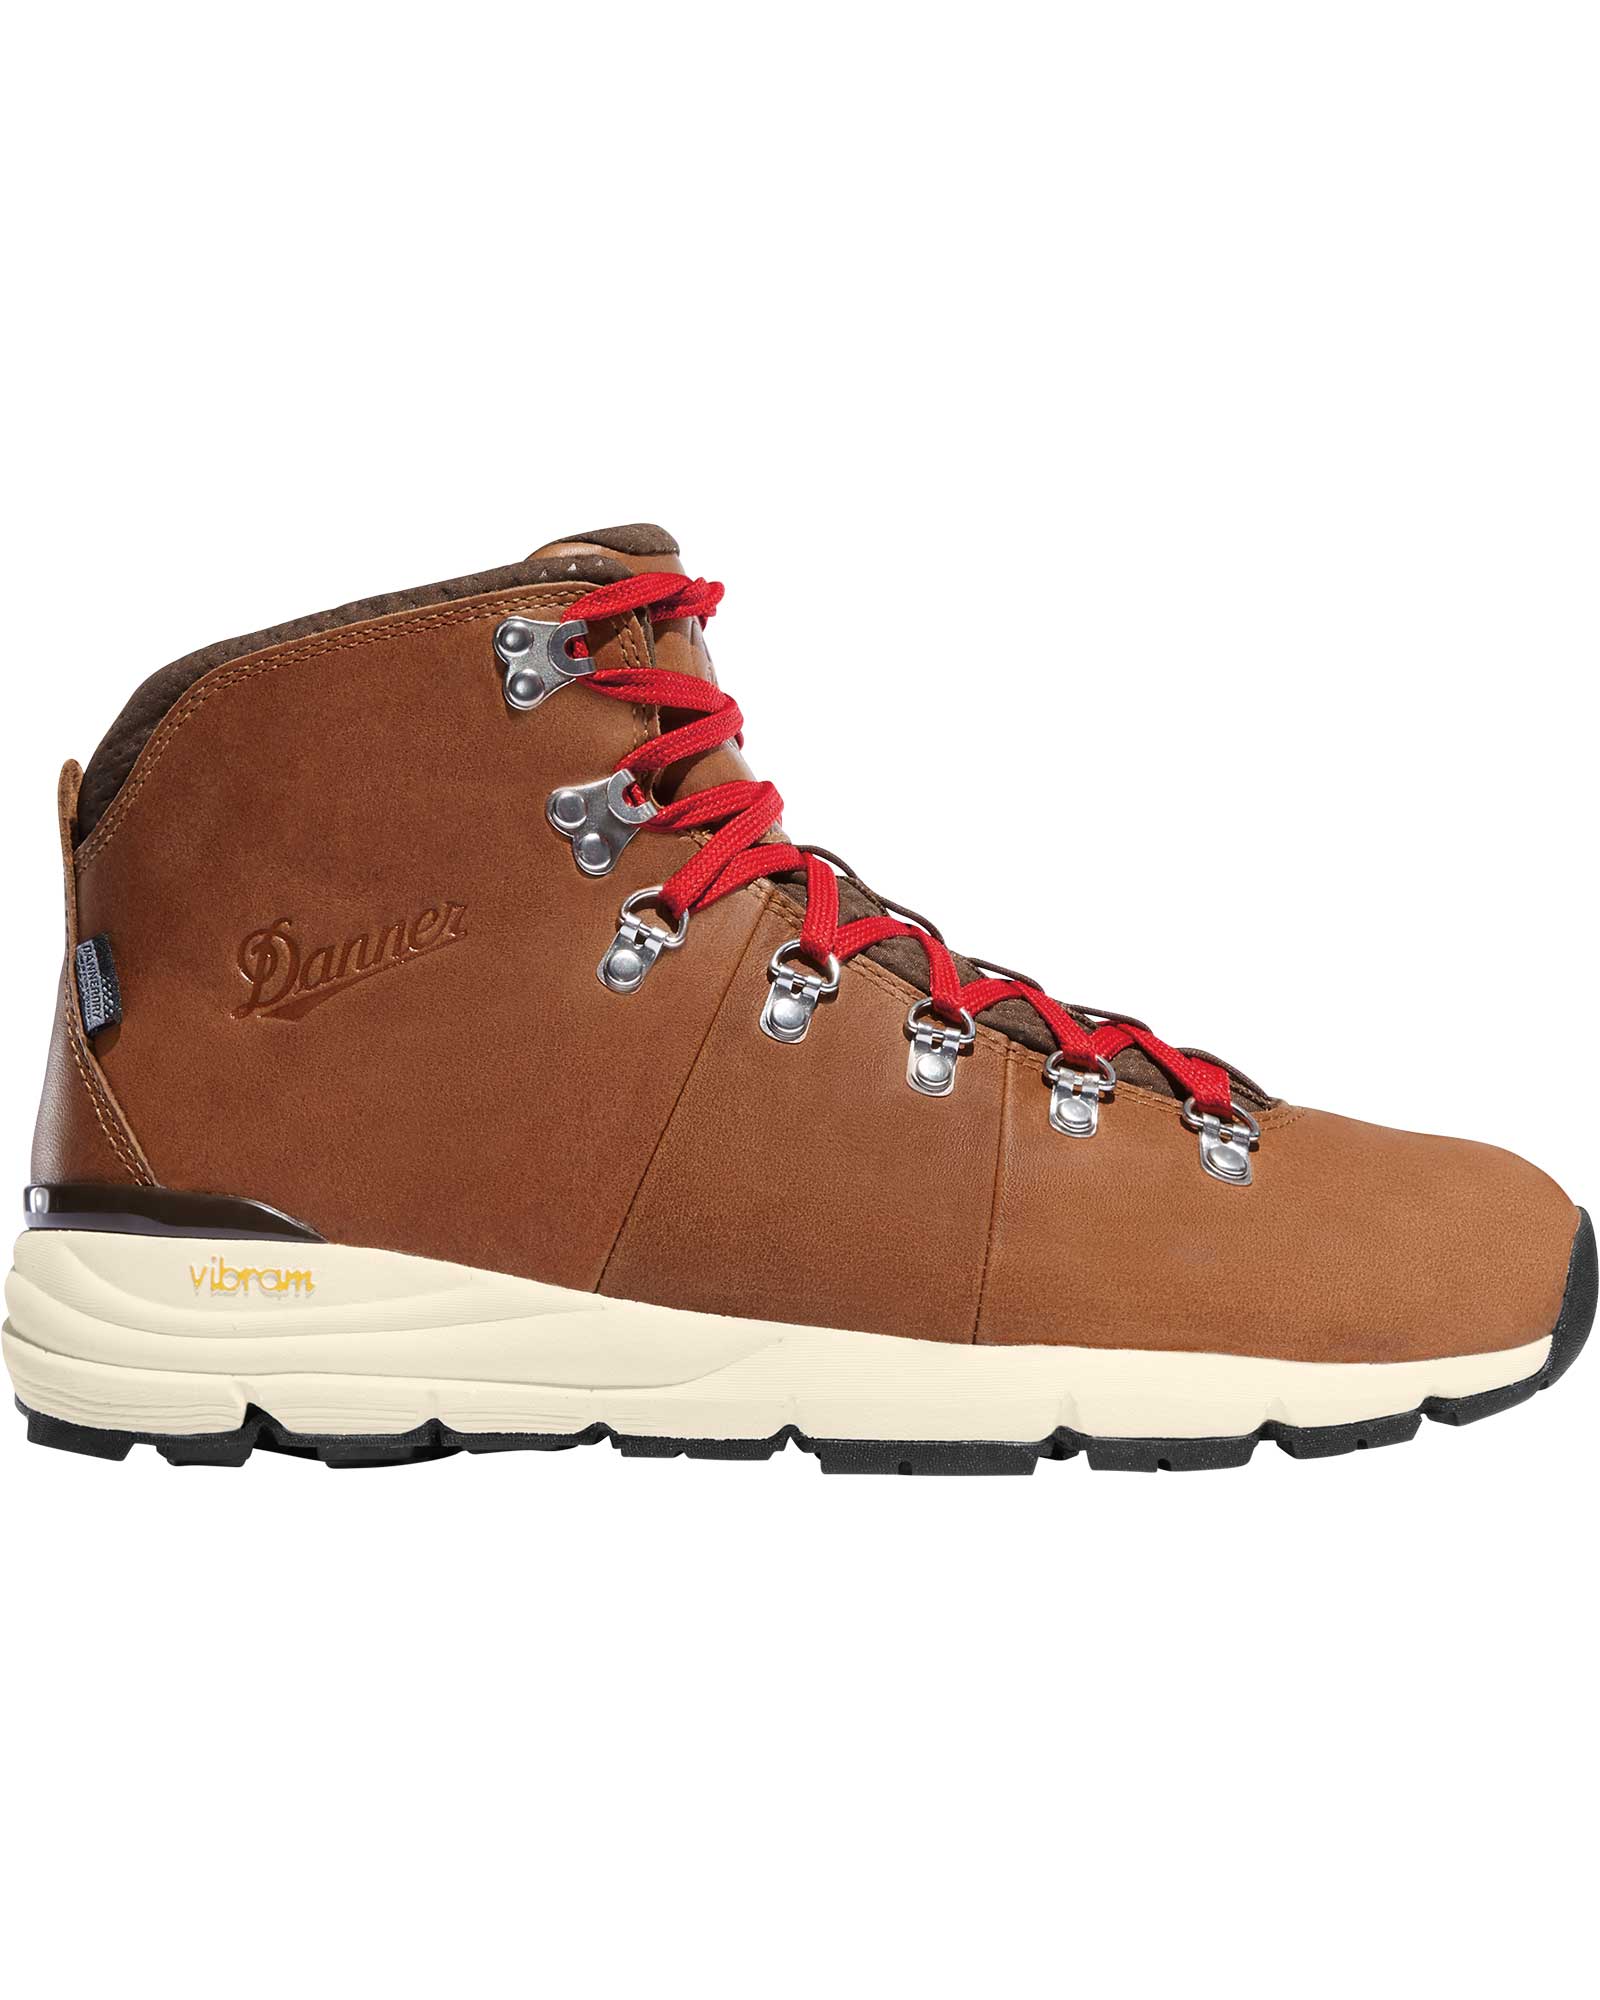 Danner Men’s Mountain 600 4.5" Boots - Saddle Tan UK 7